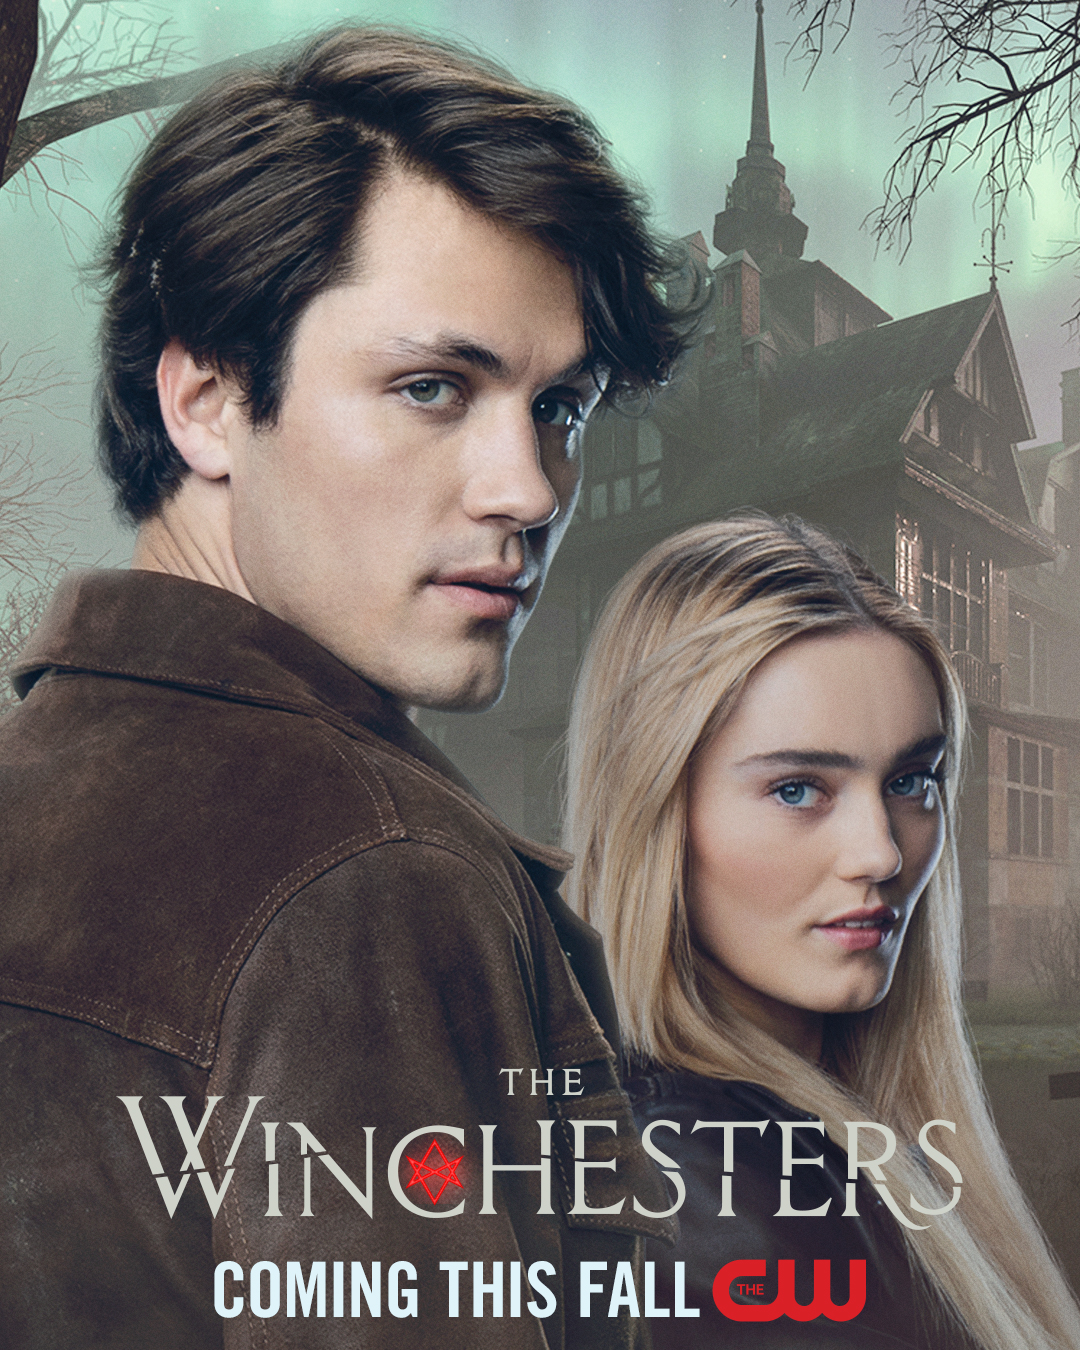  The Winchesters S01E03 (EN)[WebRip][1080p] = CSFD 56%